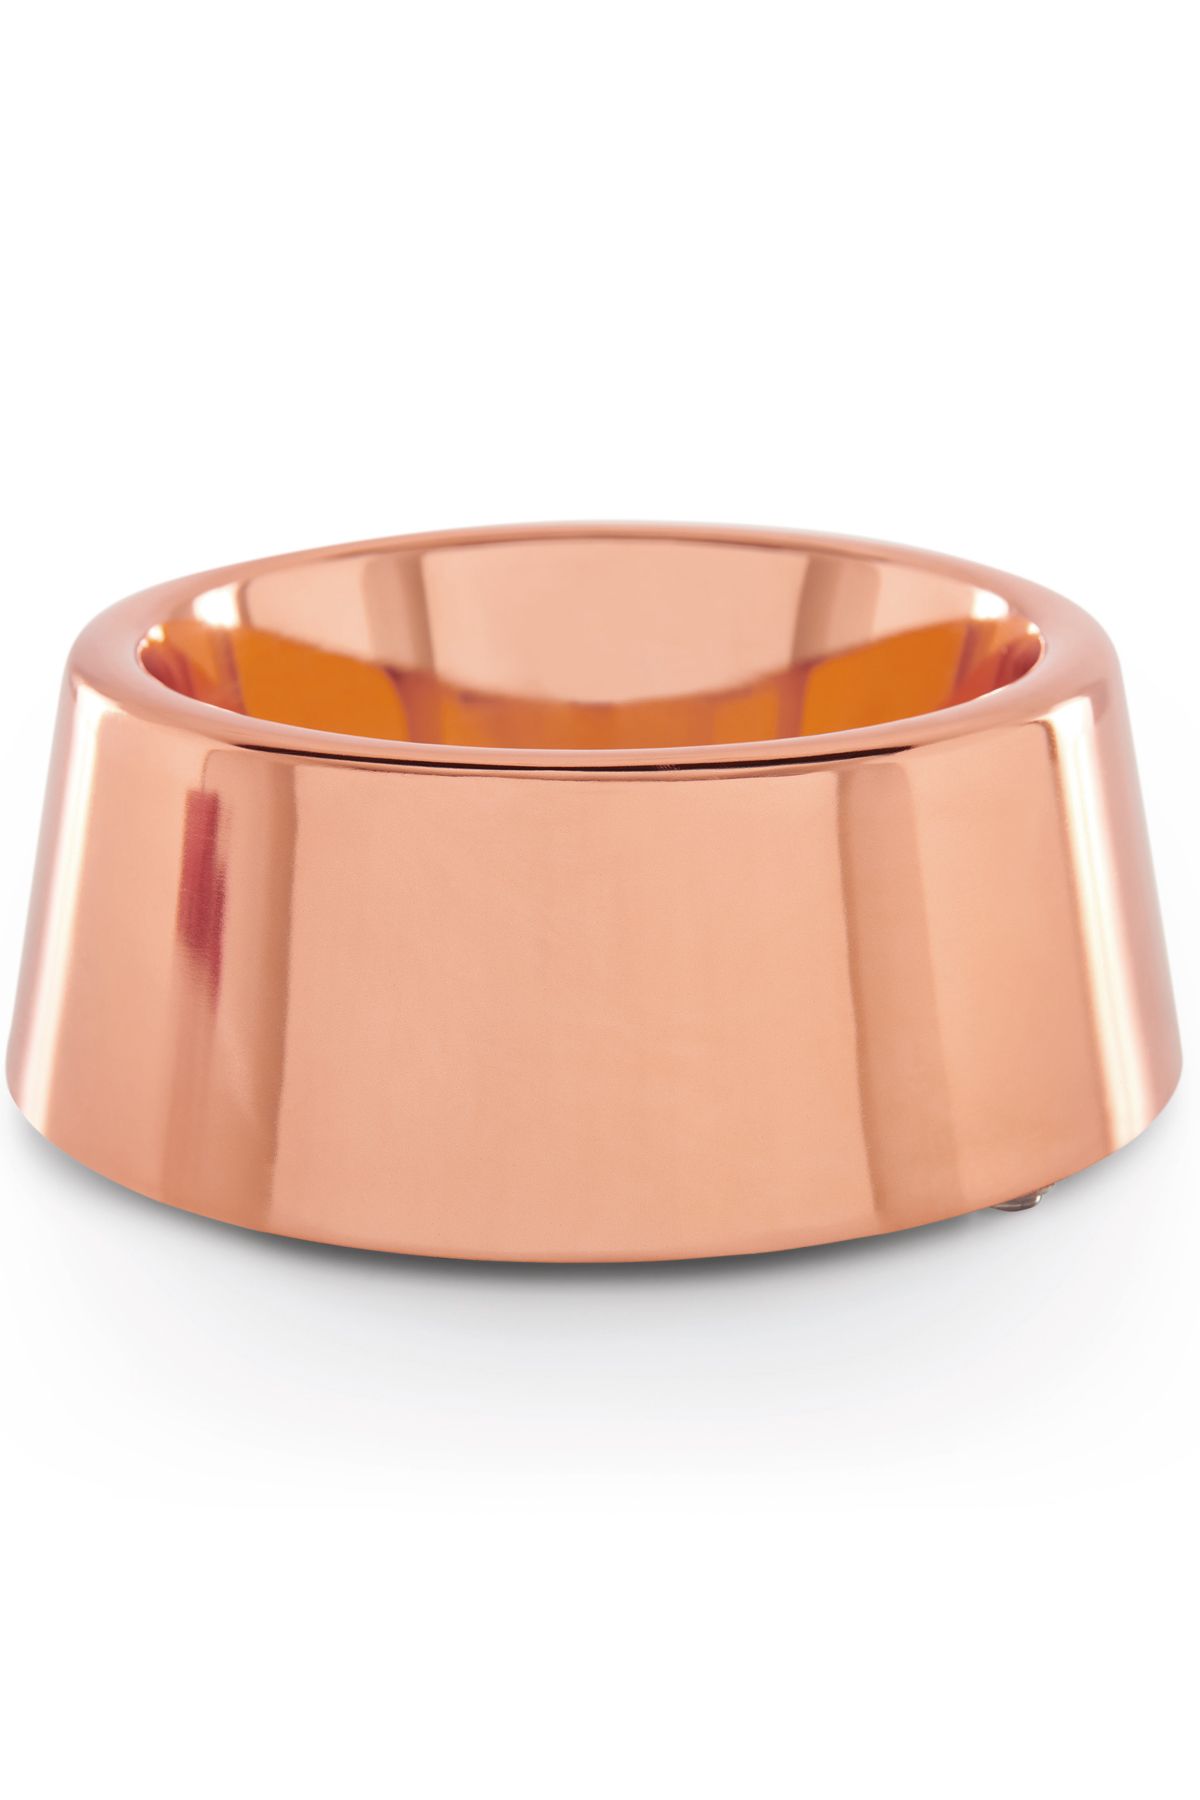 copper cat bowl